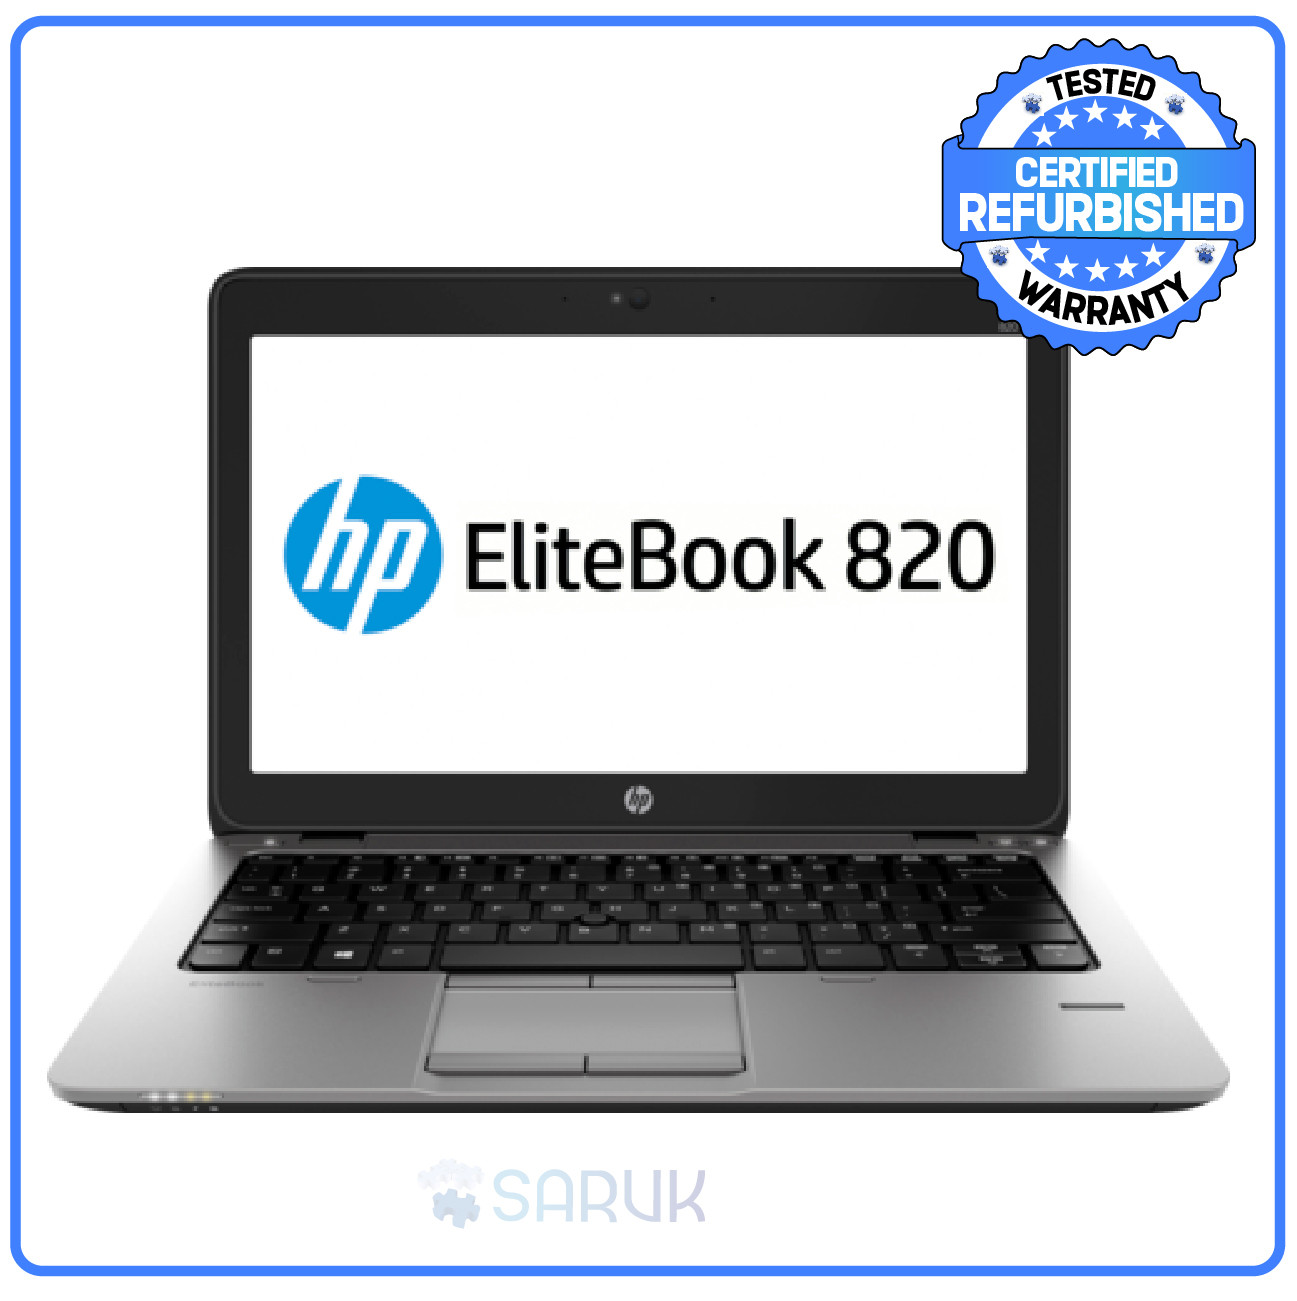 HP Elitebook 820 G1 4th Gen Intel Core i5 4GB RAM 500GB HDD (EX-UK)